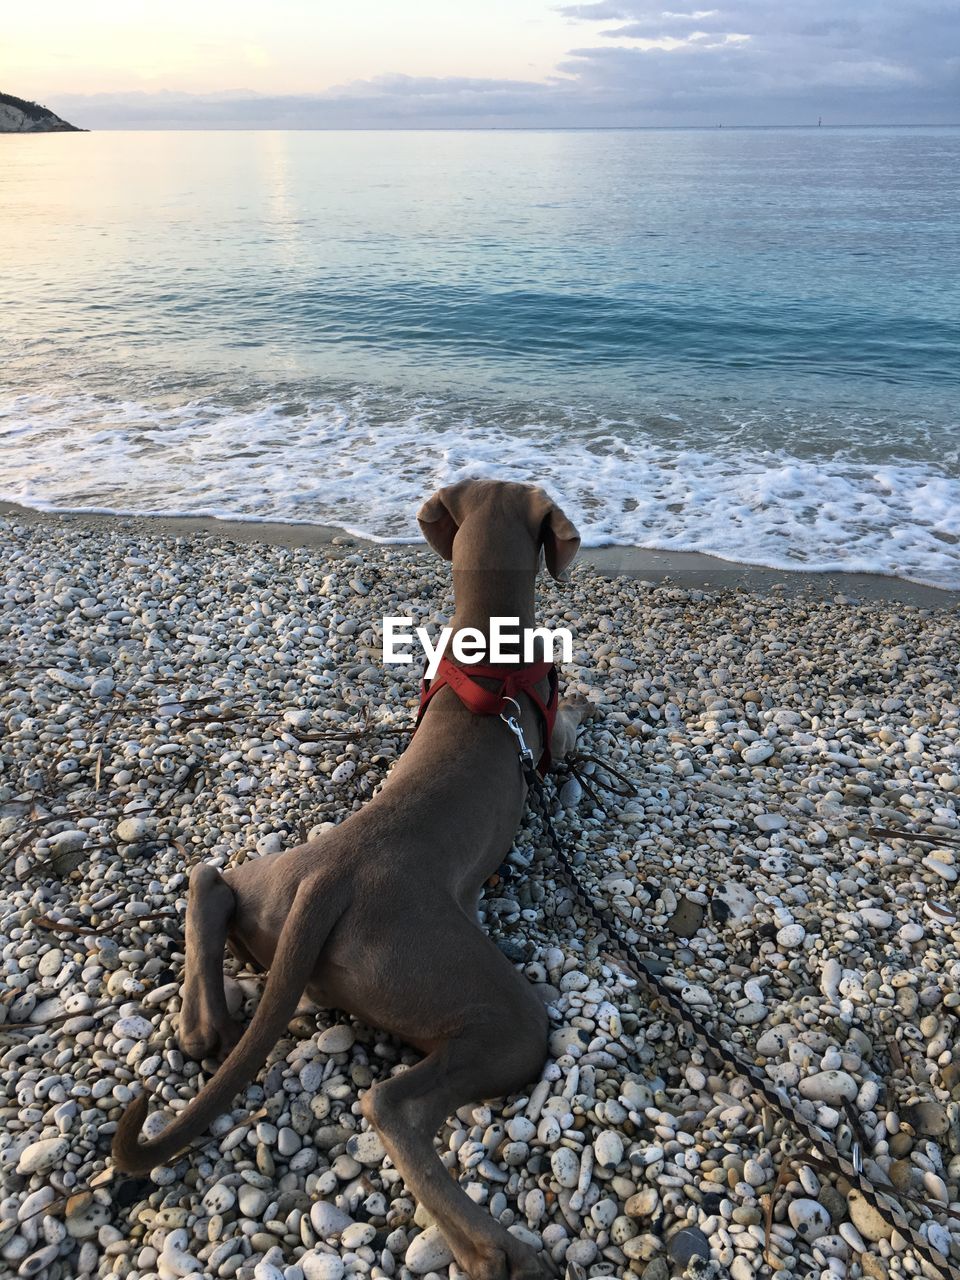 DOG ON ROCK AT BEACH